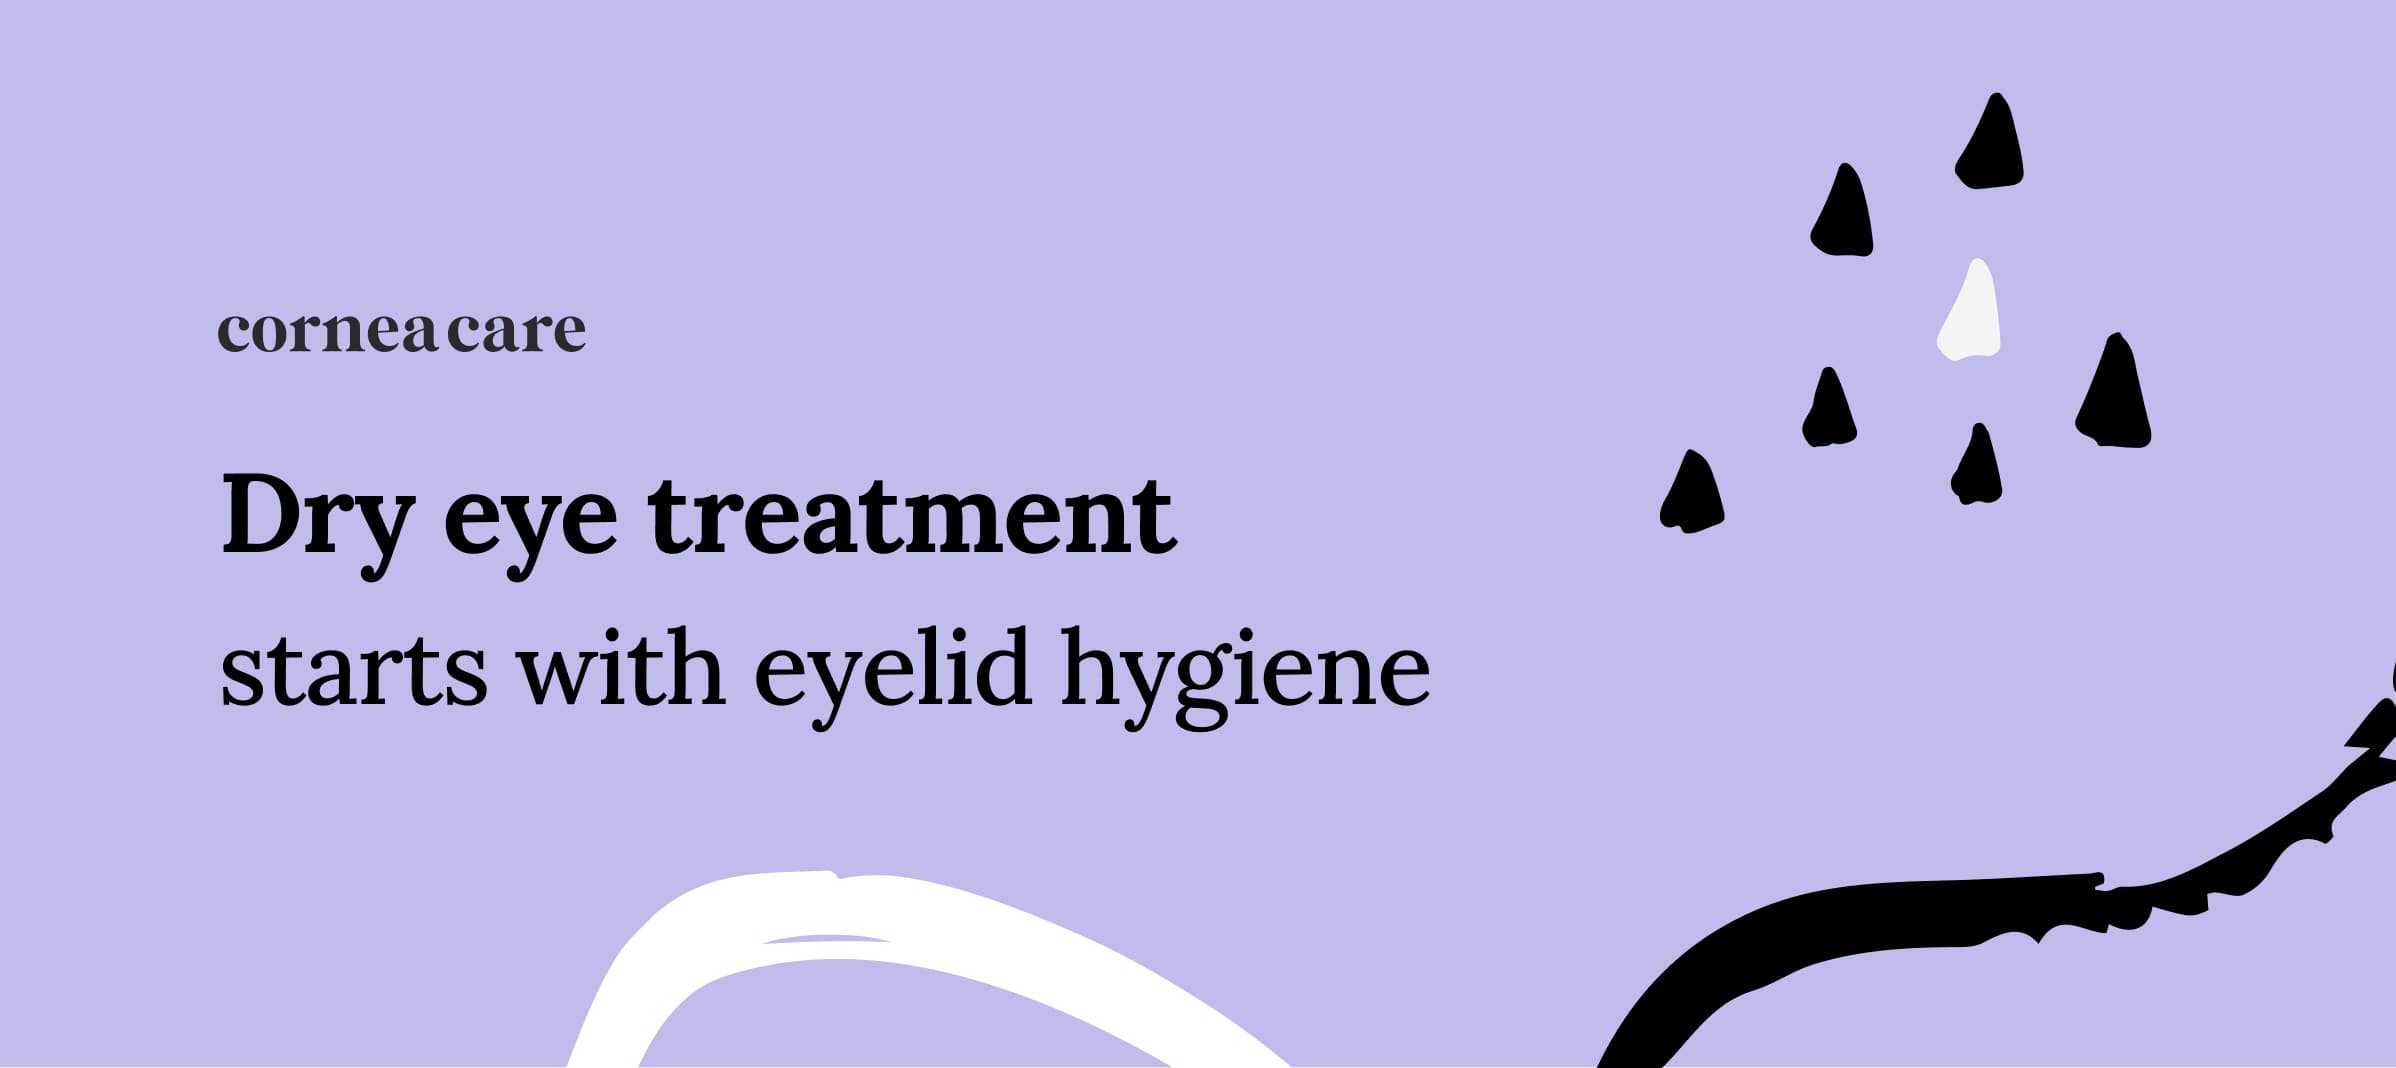 Dry eye treatment starts with eyelid hygiene